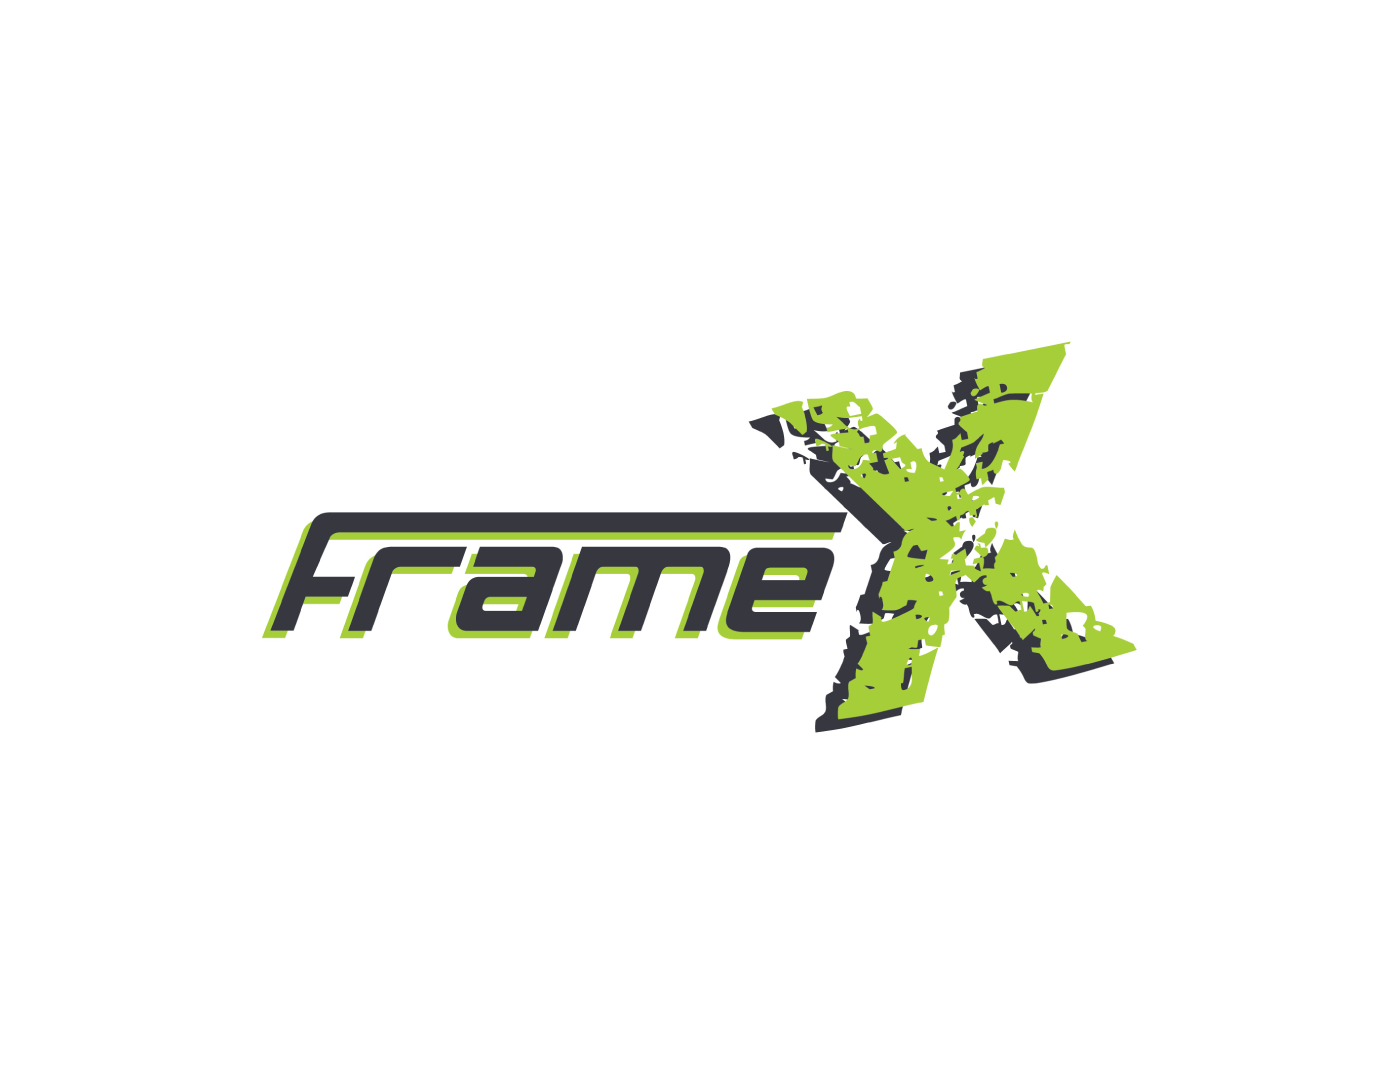 FrameX